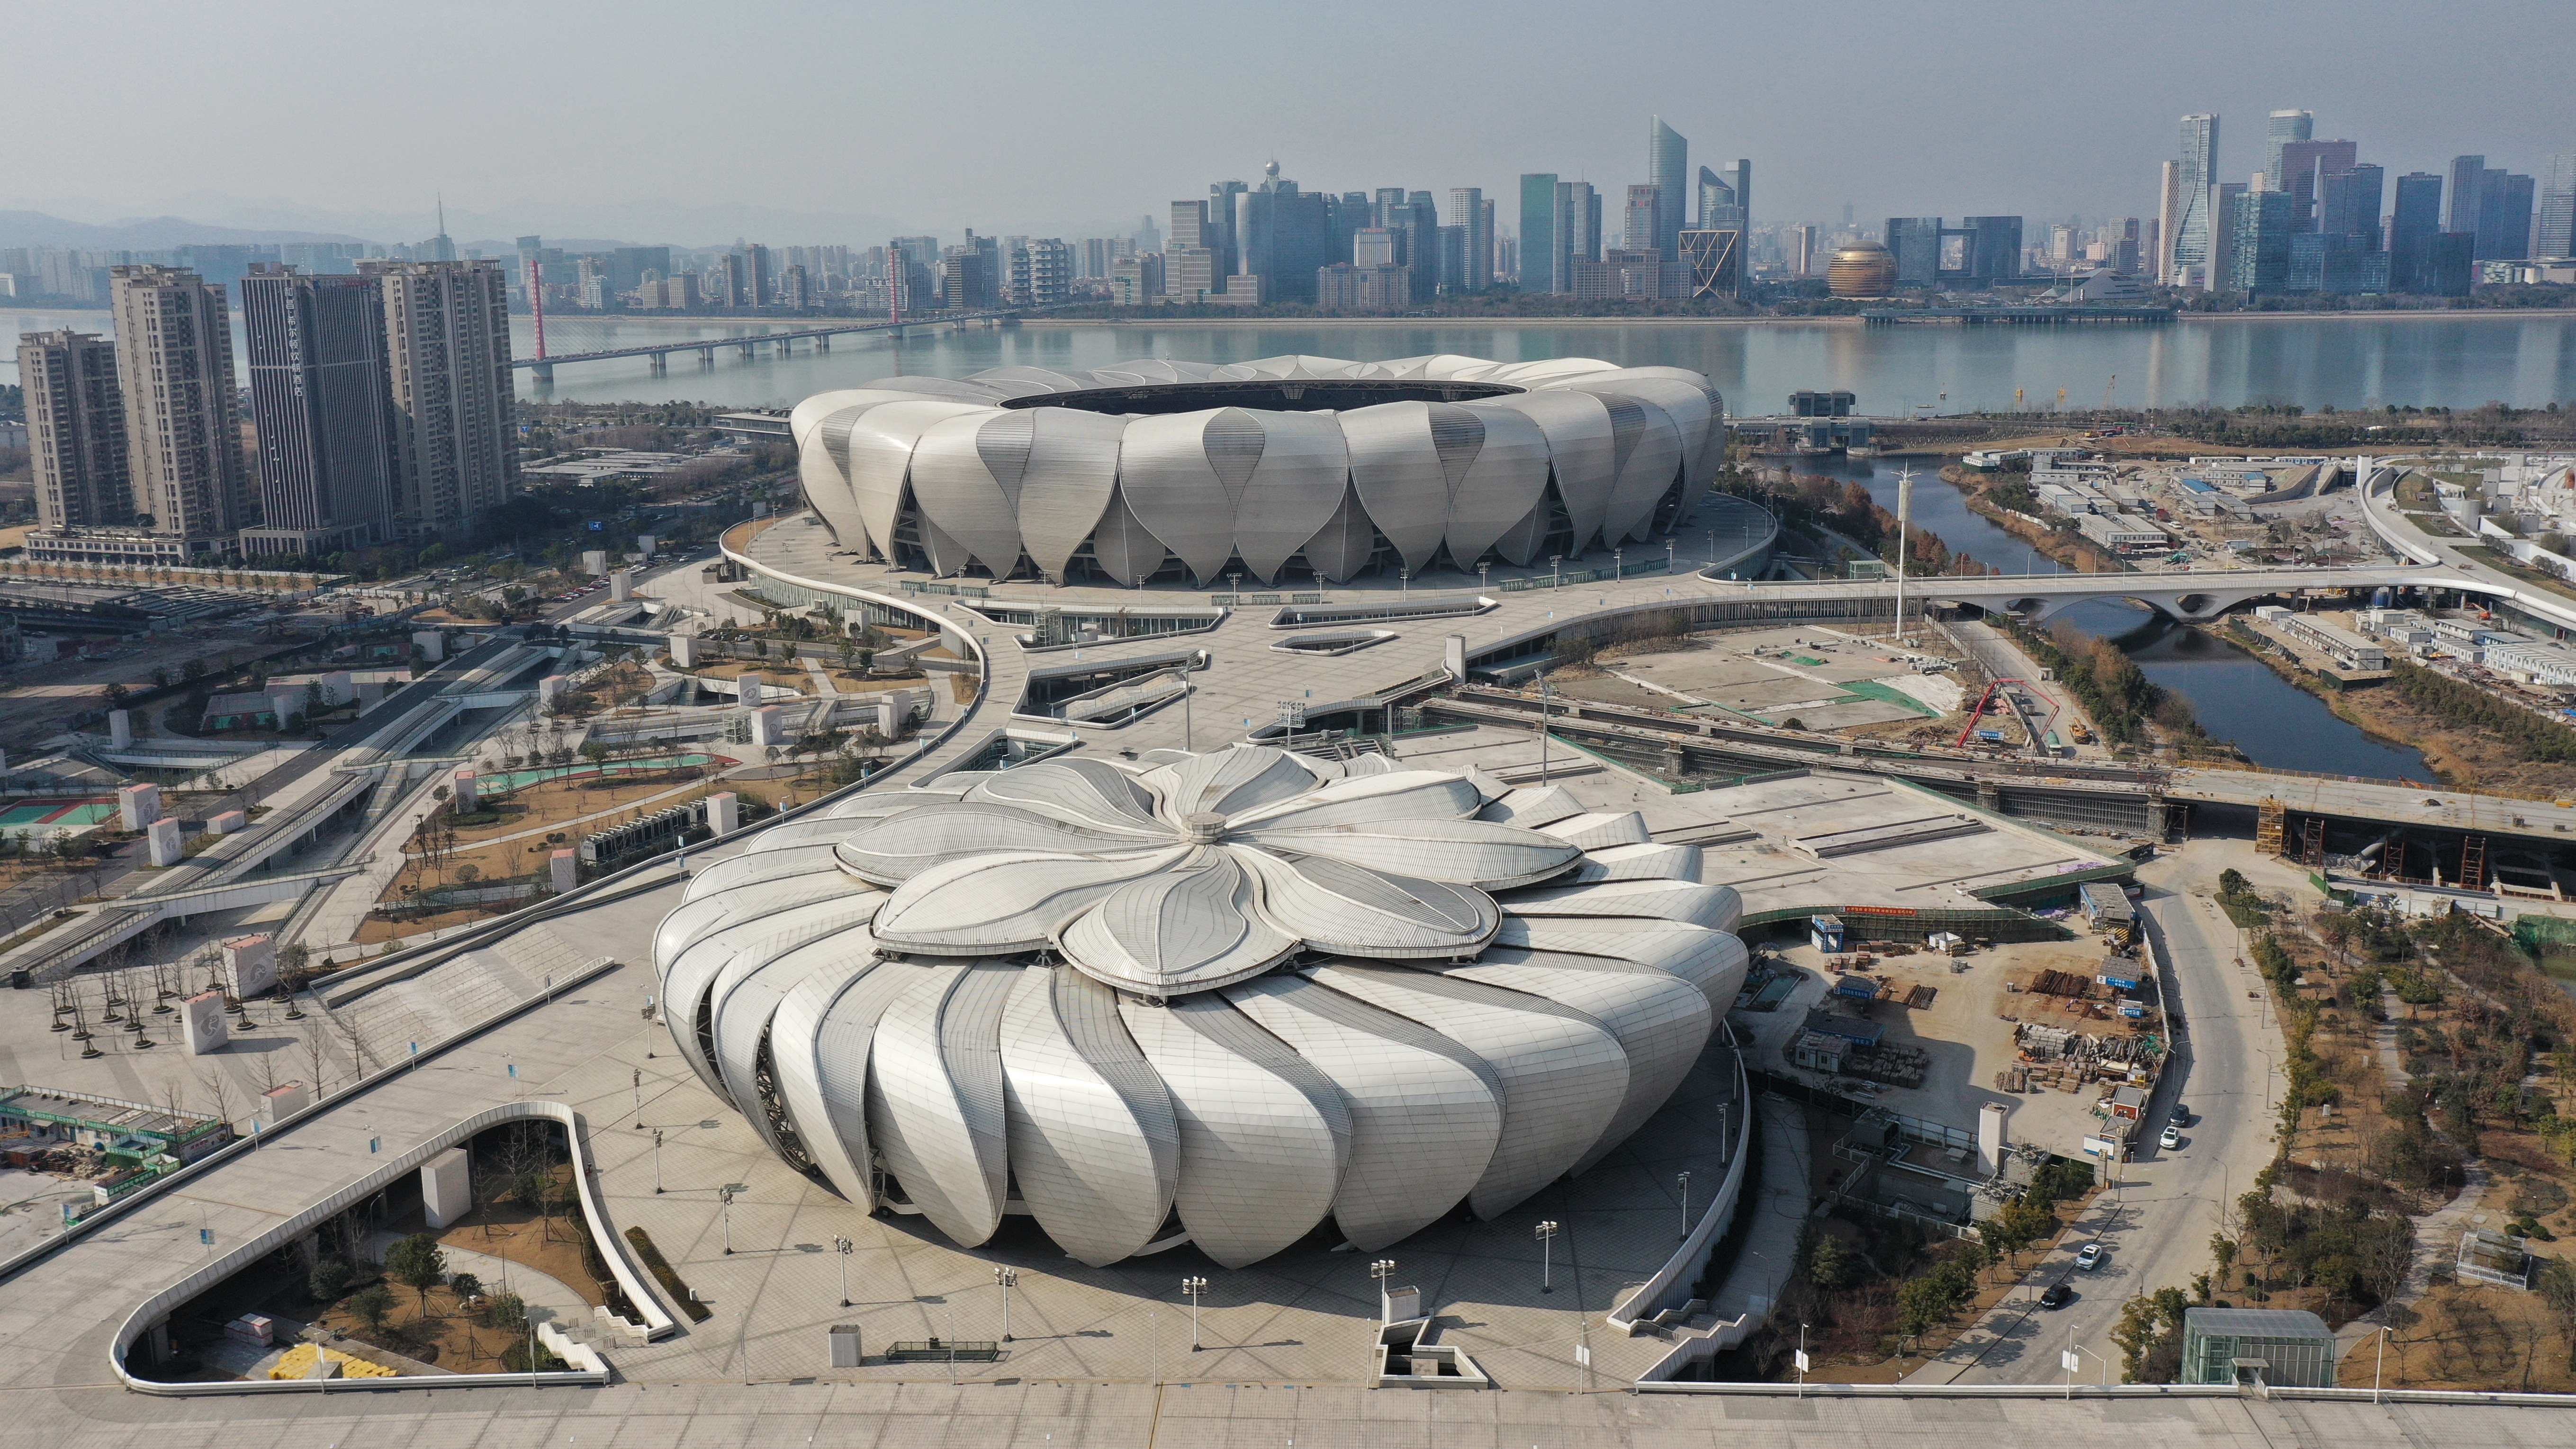 Hangzhou Olympic Sports Expo Center - Wikipedia